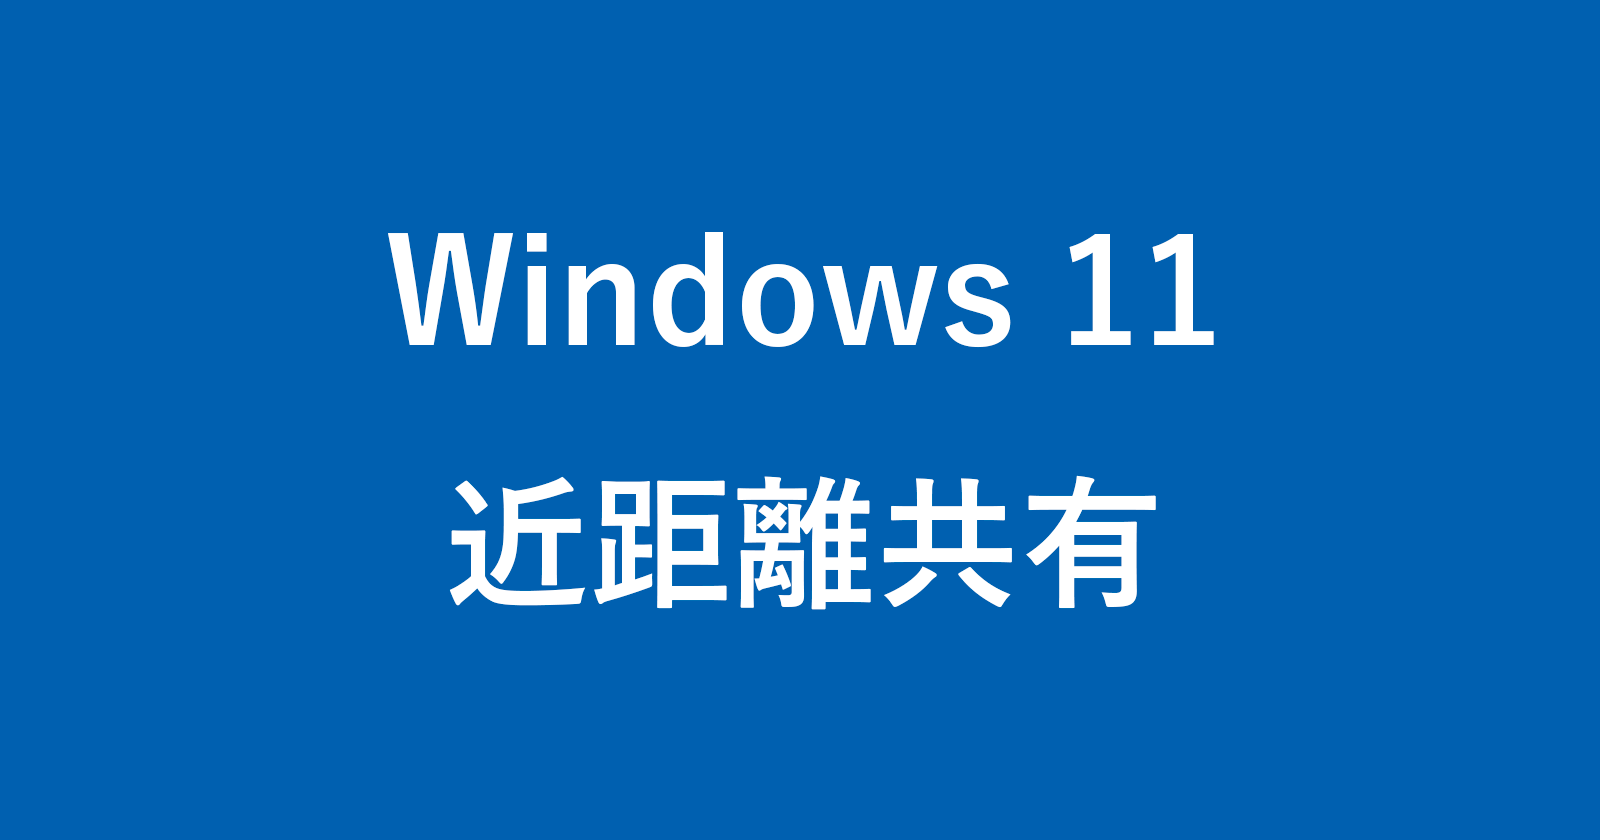 windows 11 nearby sharing